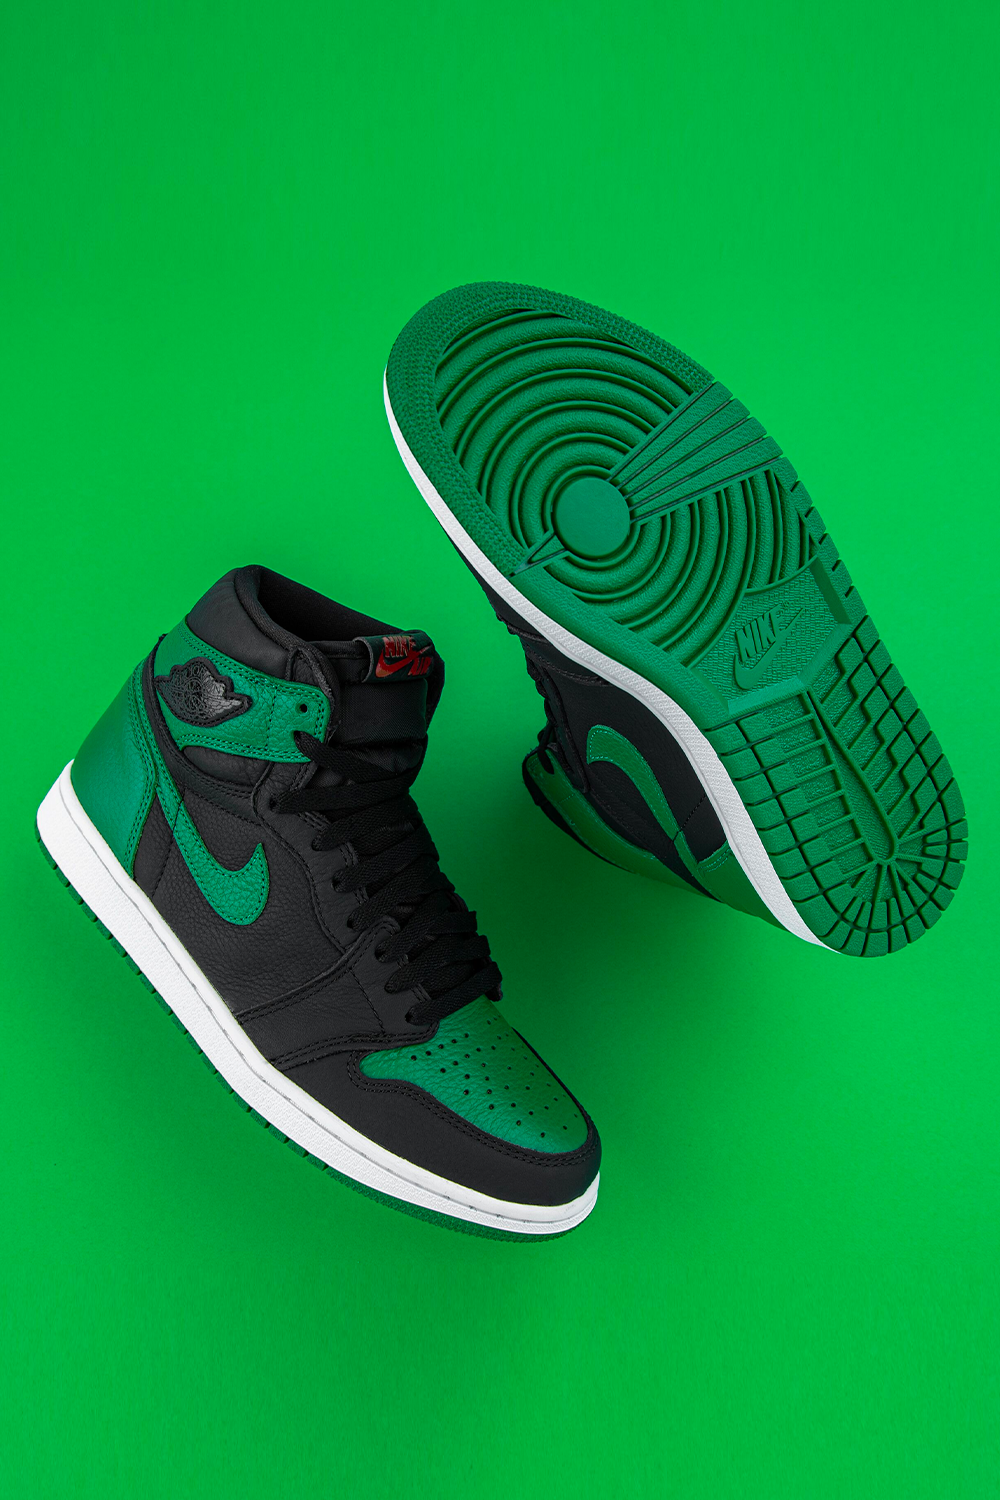 Green Jordans Wallpapers